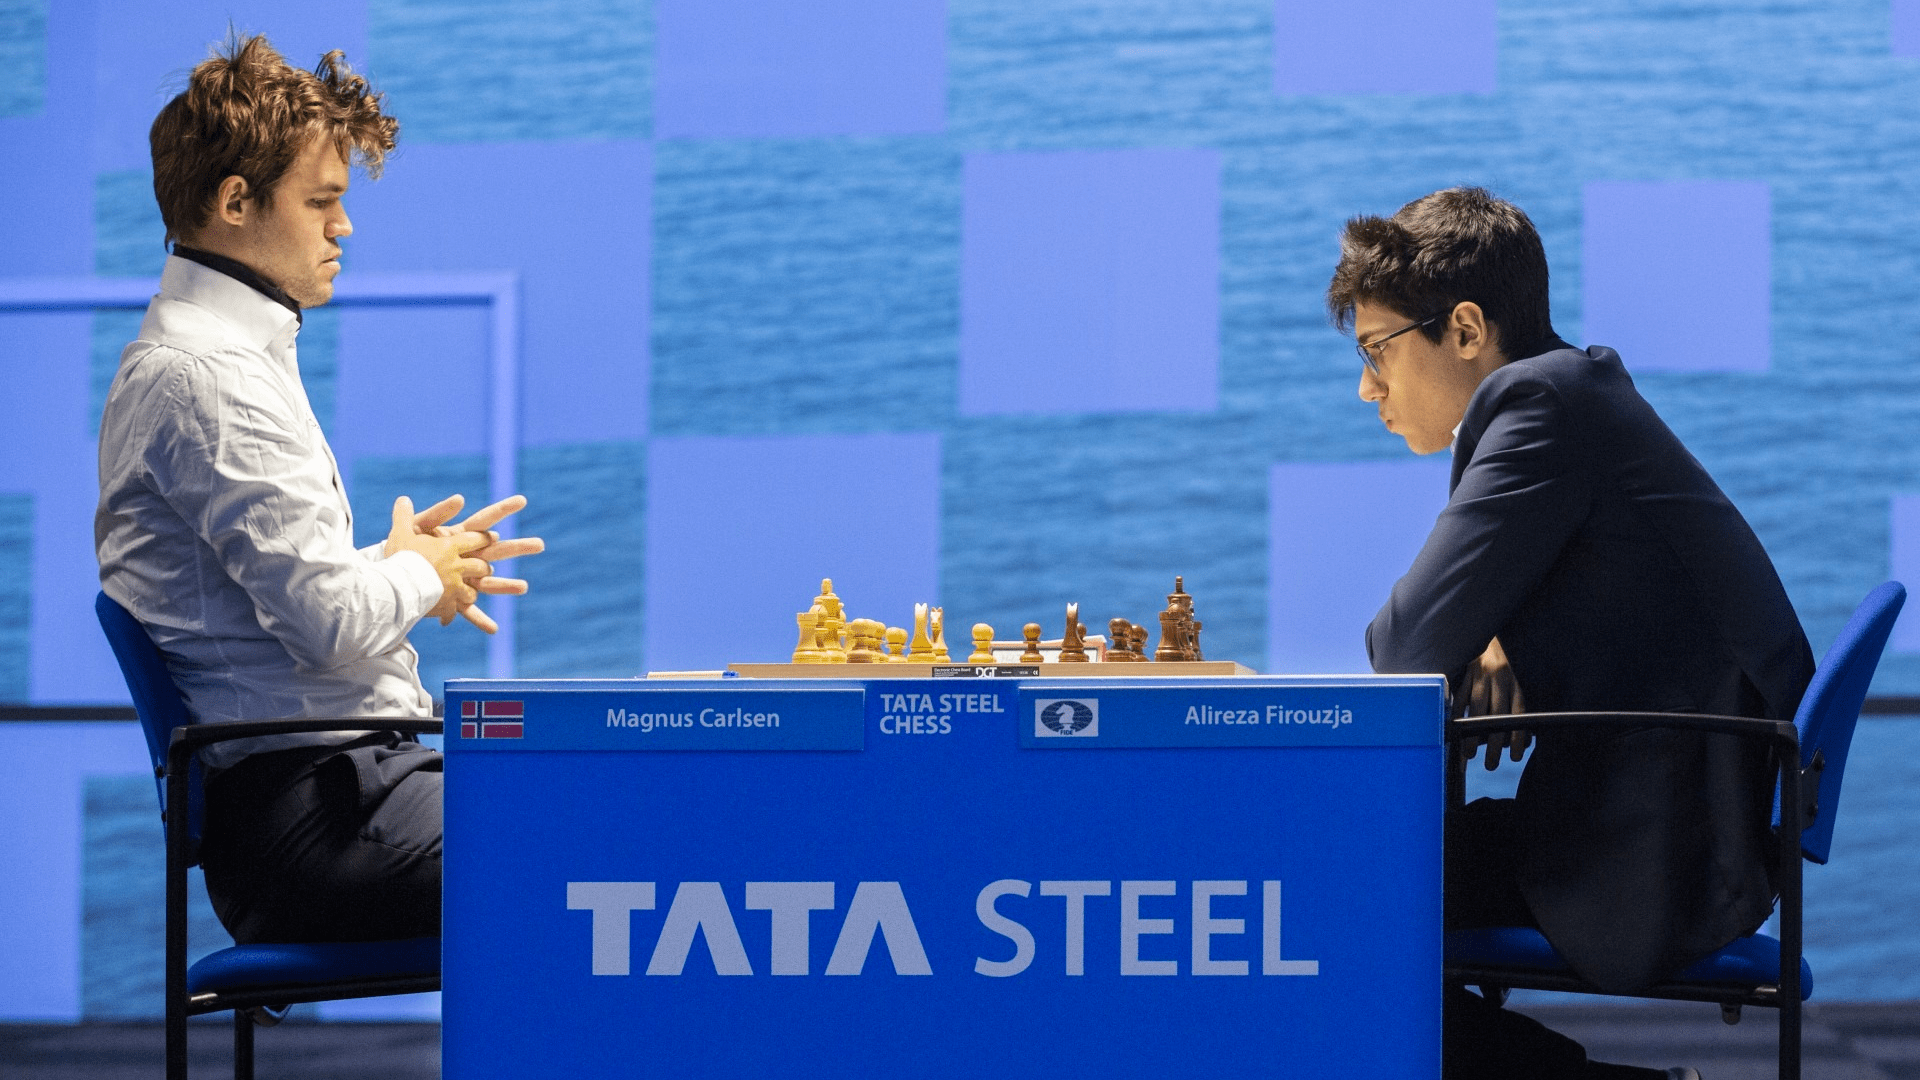 News  Tata Steel Chess Tournament